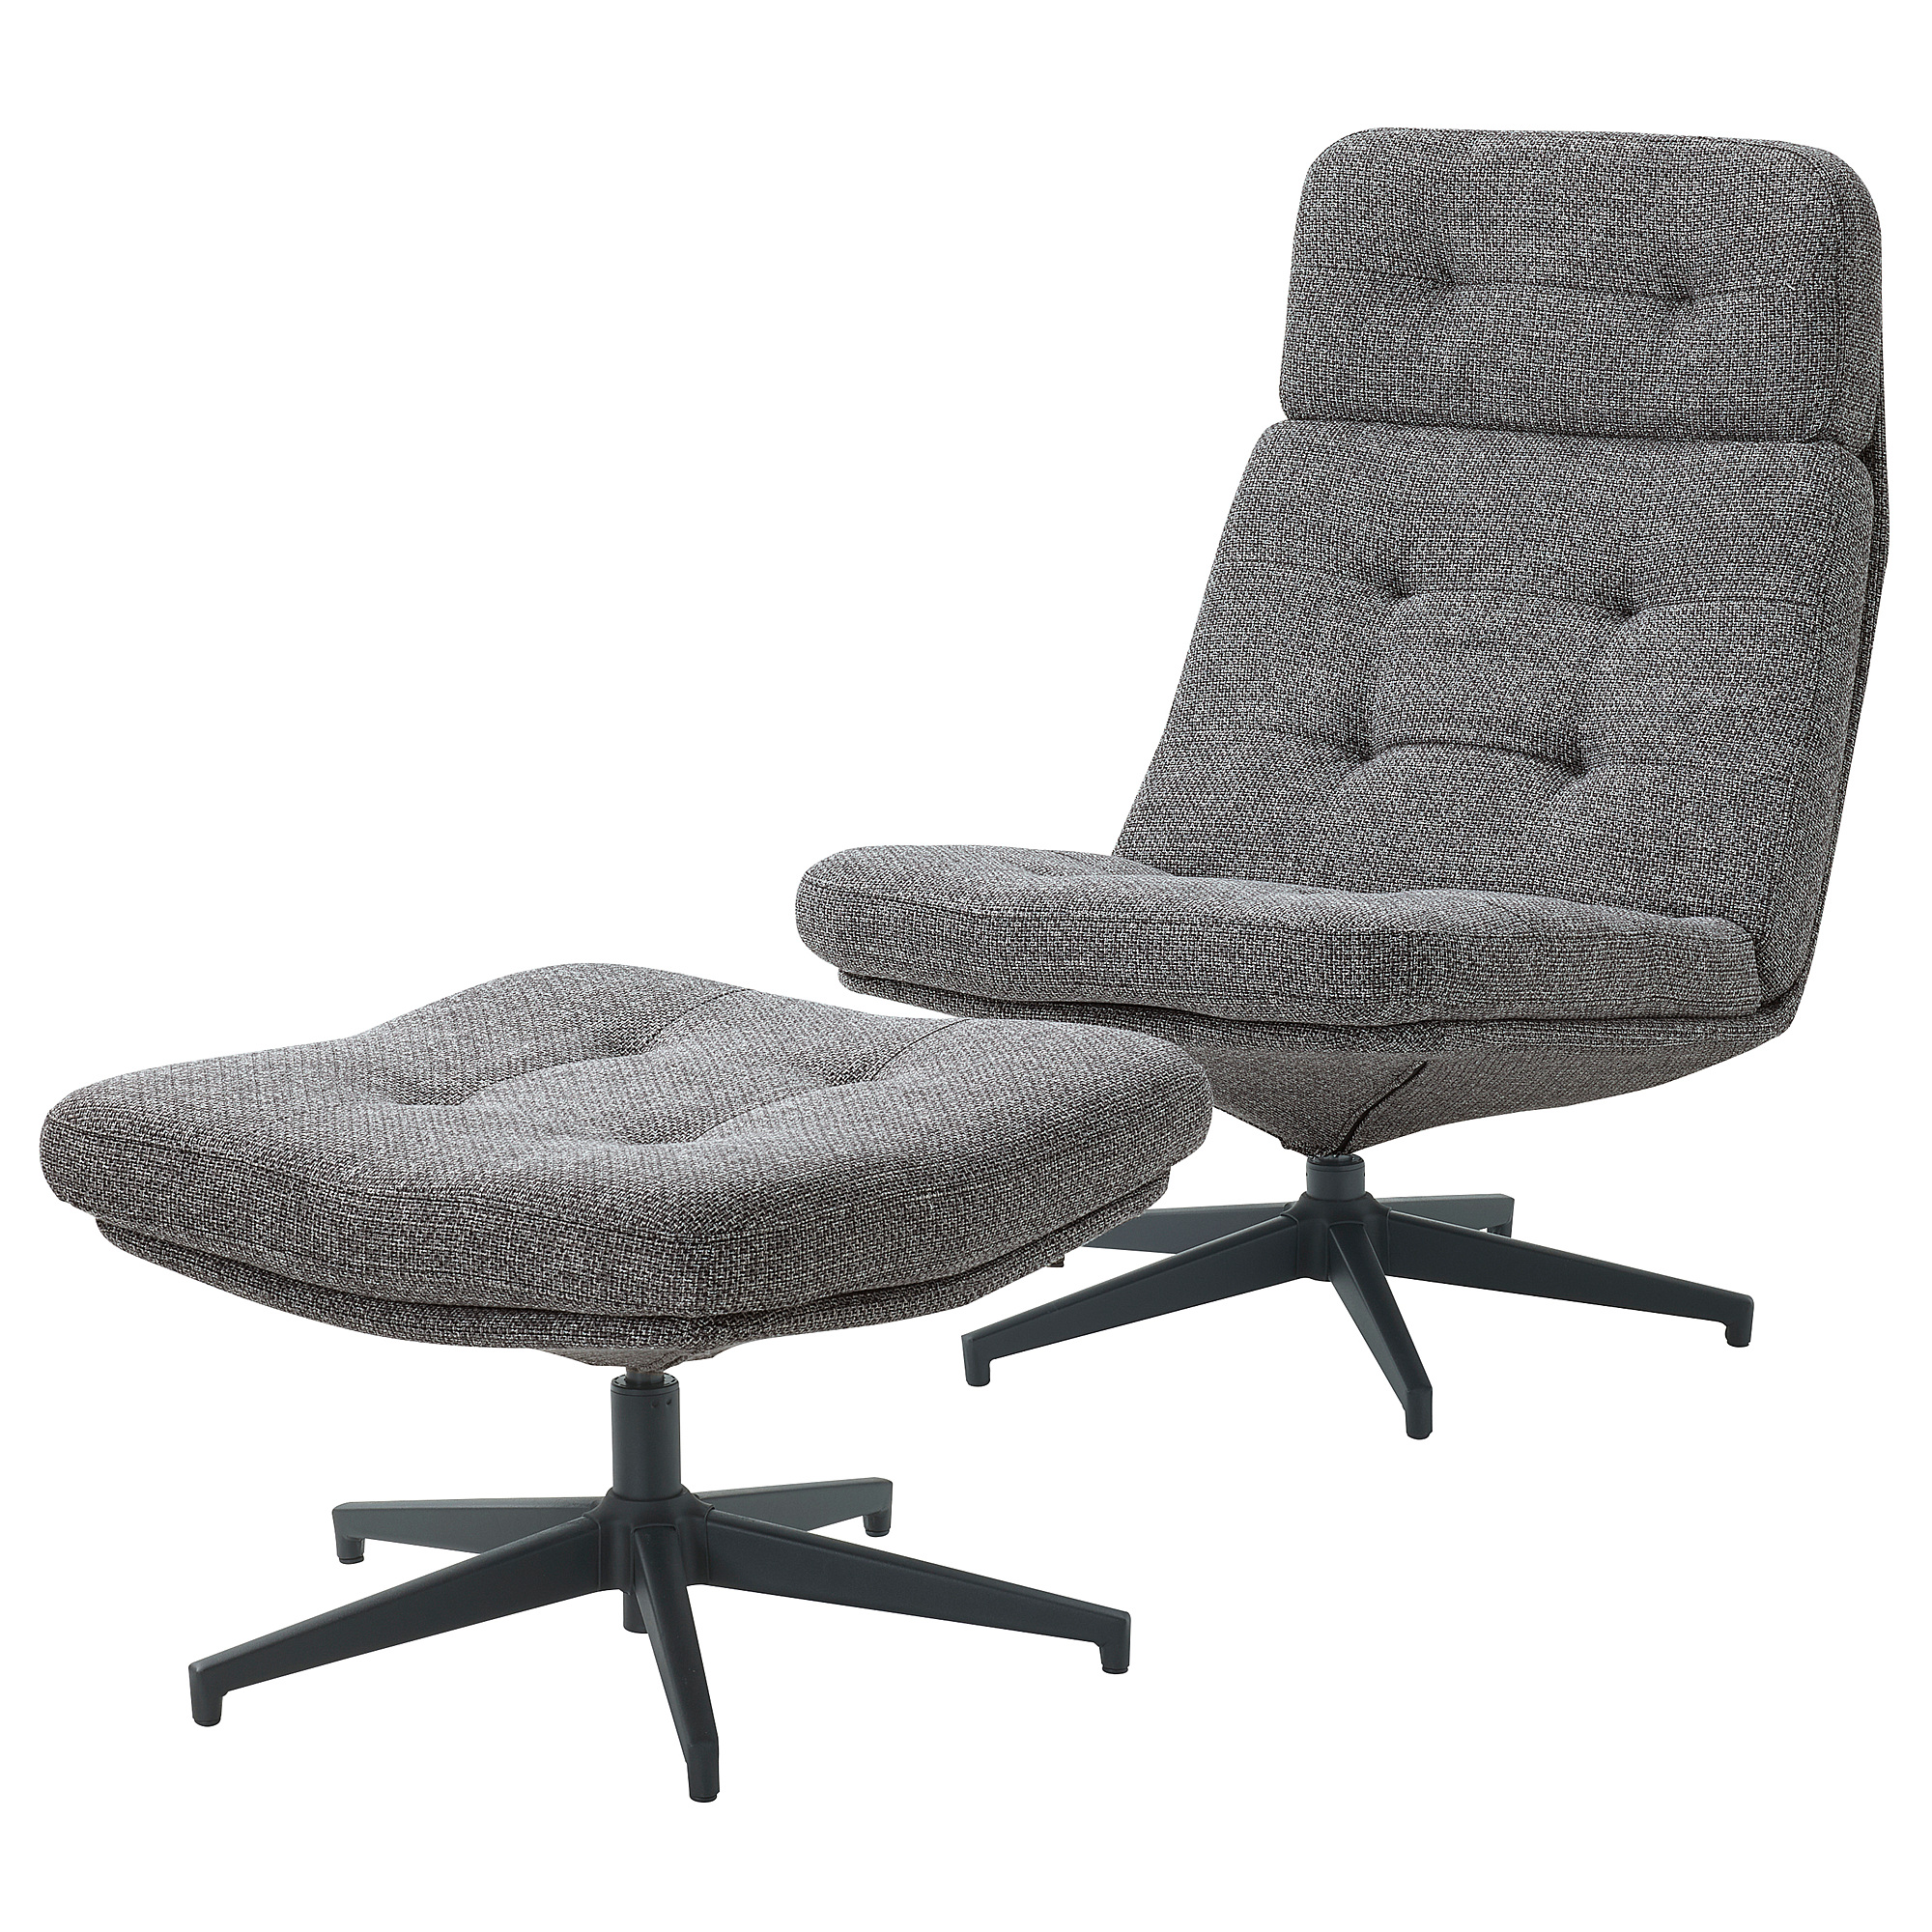 HAVBERG armchair and footstool